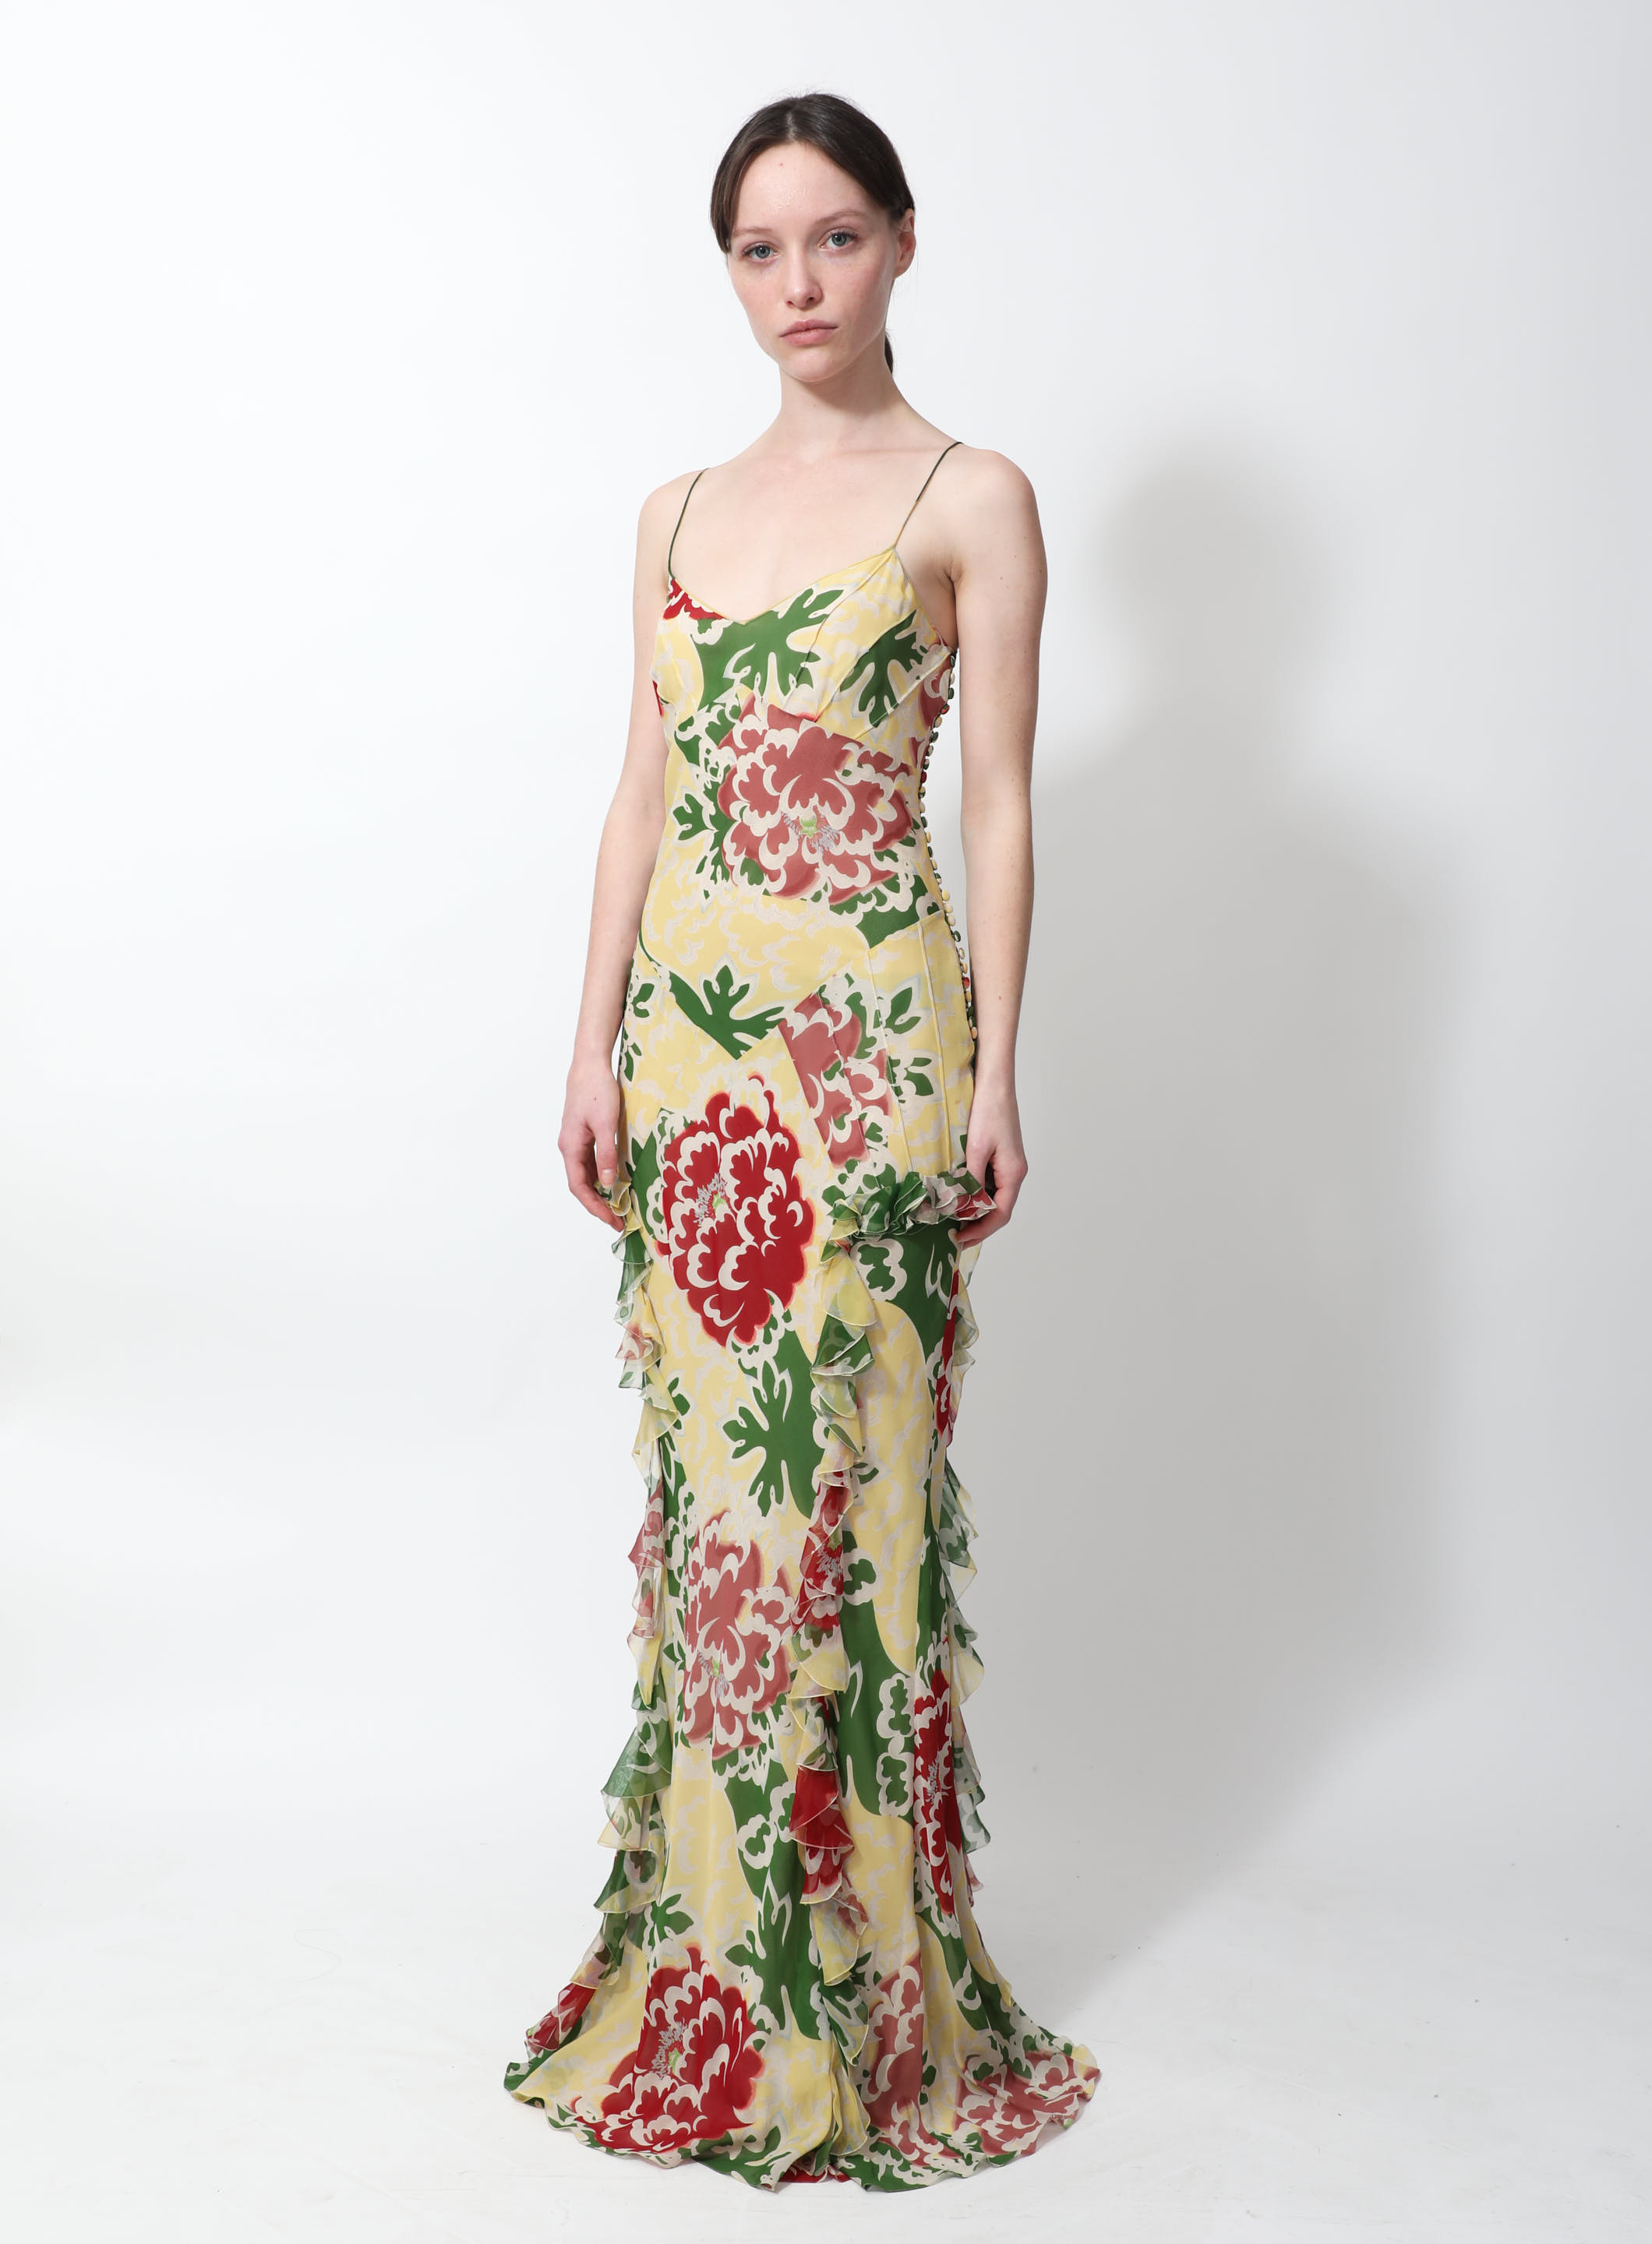 Ruffled Floral Silk Slip Dress, Authentic & Vintage